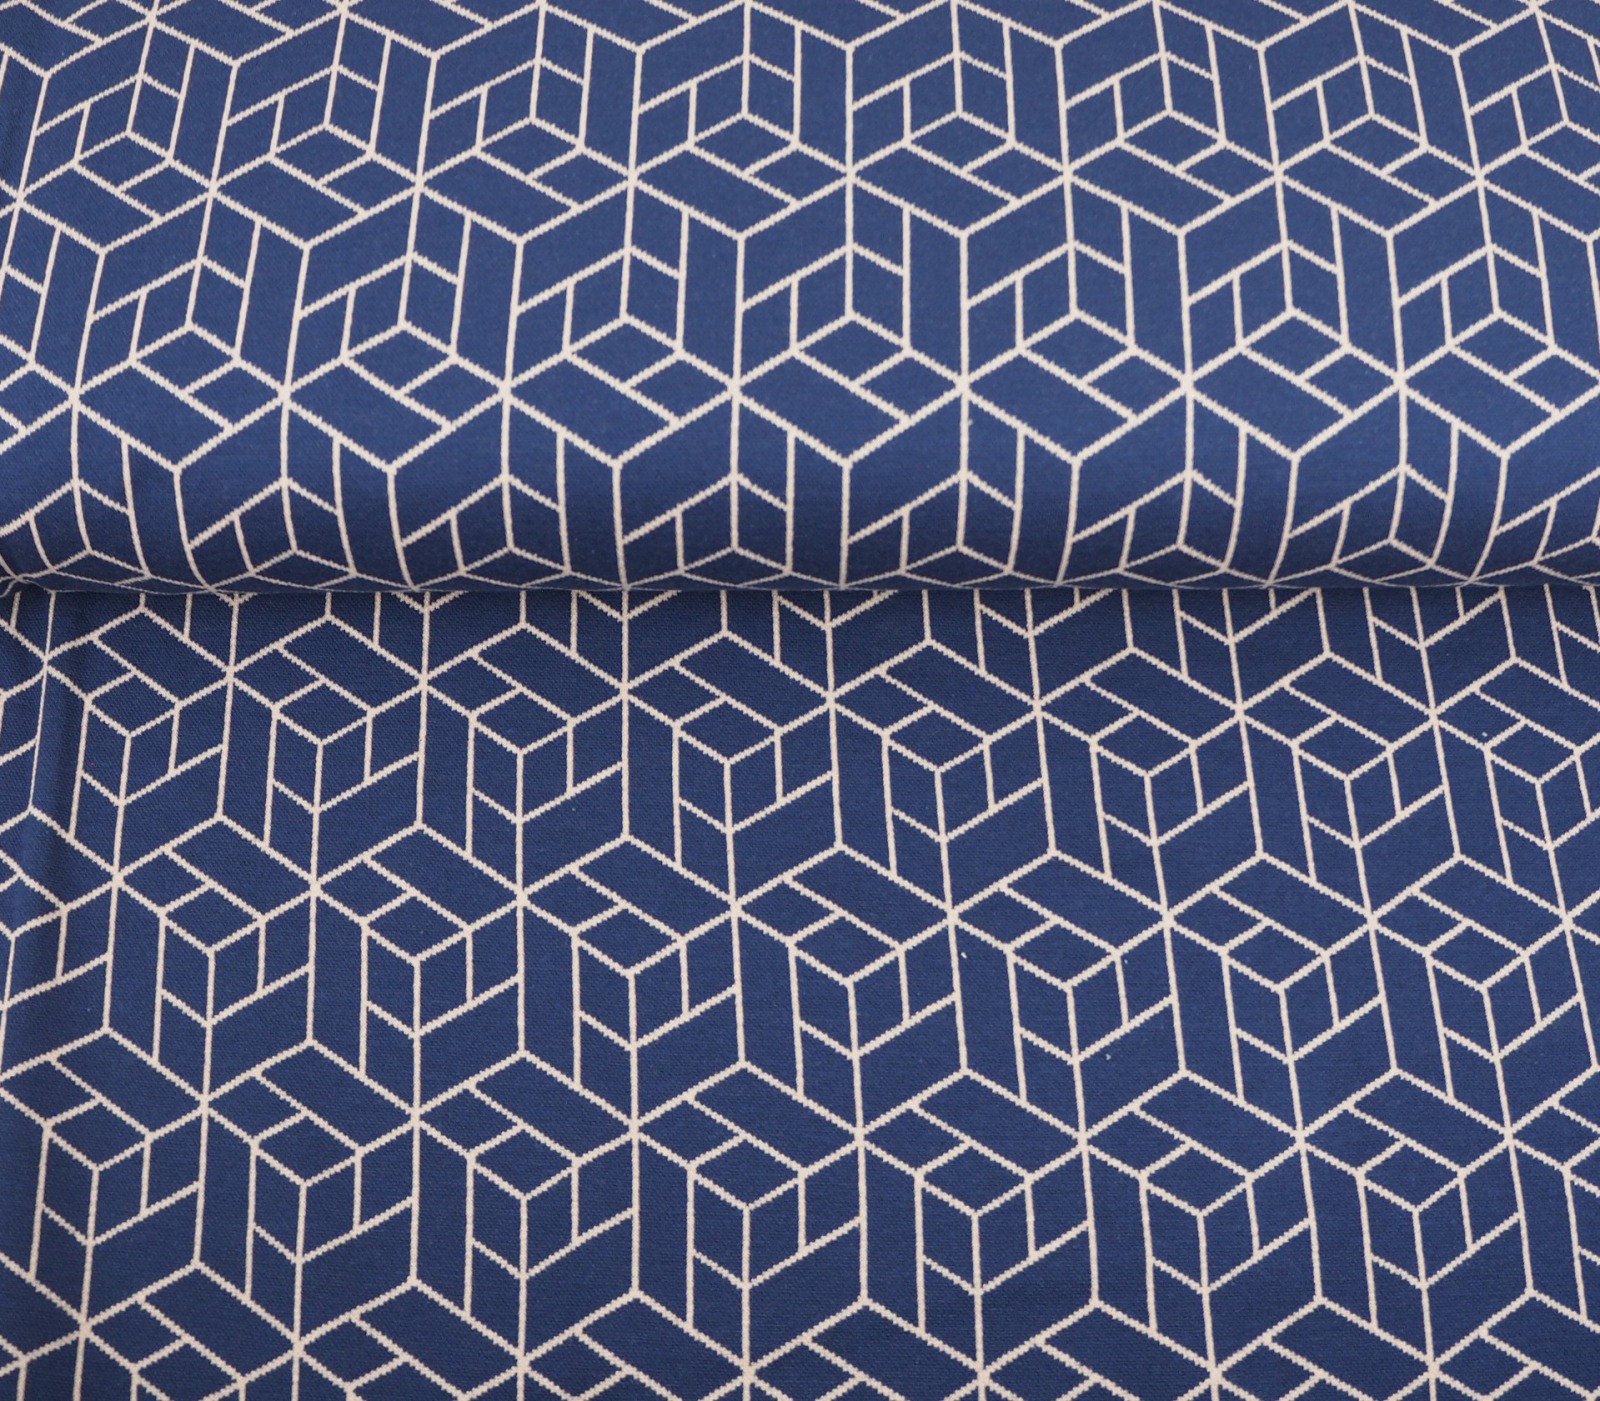 Jaquardstrick 1596/m Cozy Collection by lycklig design Swafing blau geometrisches Muster Damenstoffe Meterware 2